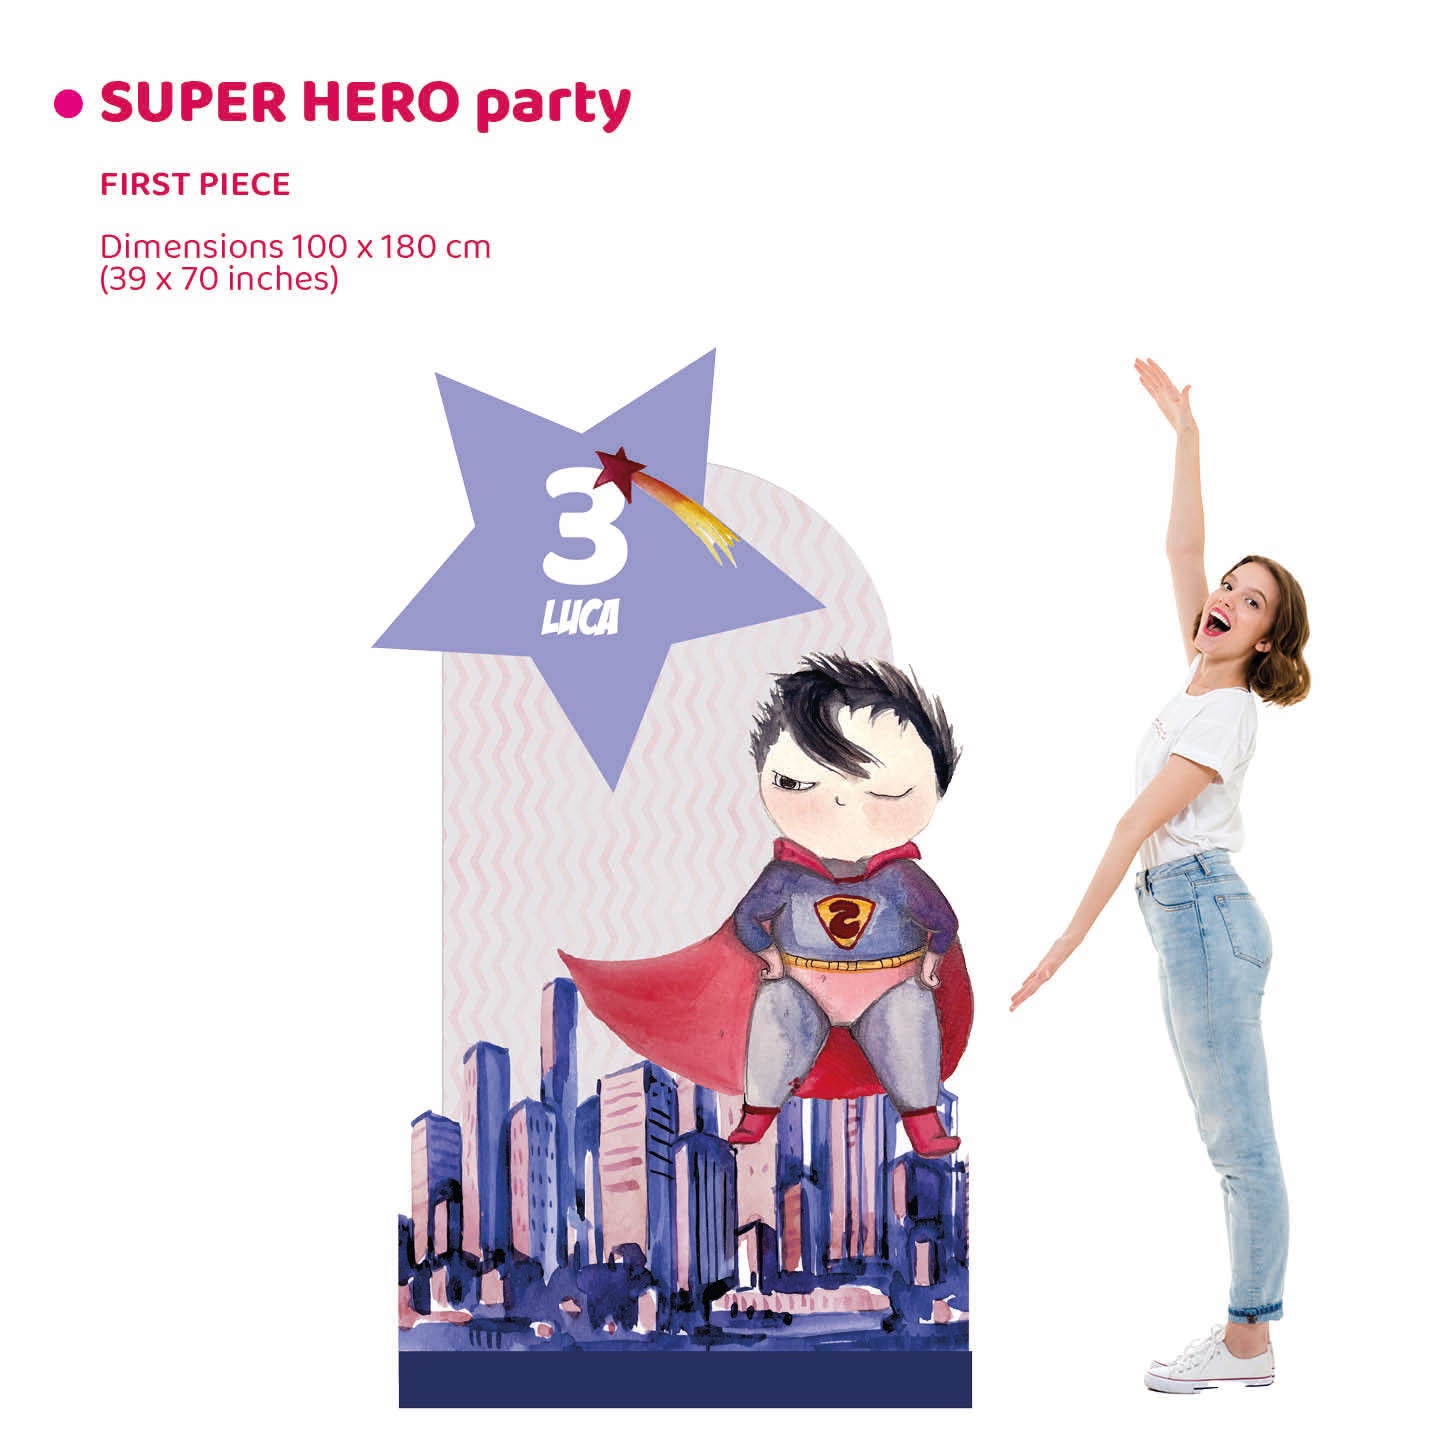 SUPER HERO PARTY doppio da terra | Decori compleanno bimbo - Peekaboo